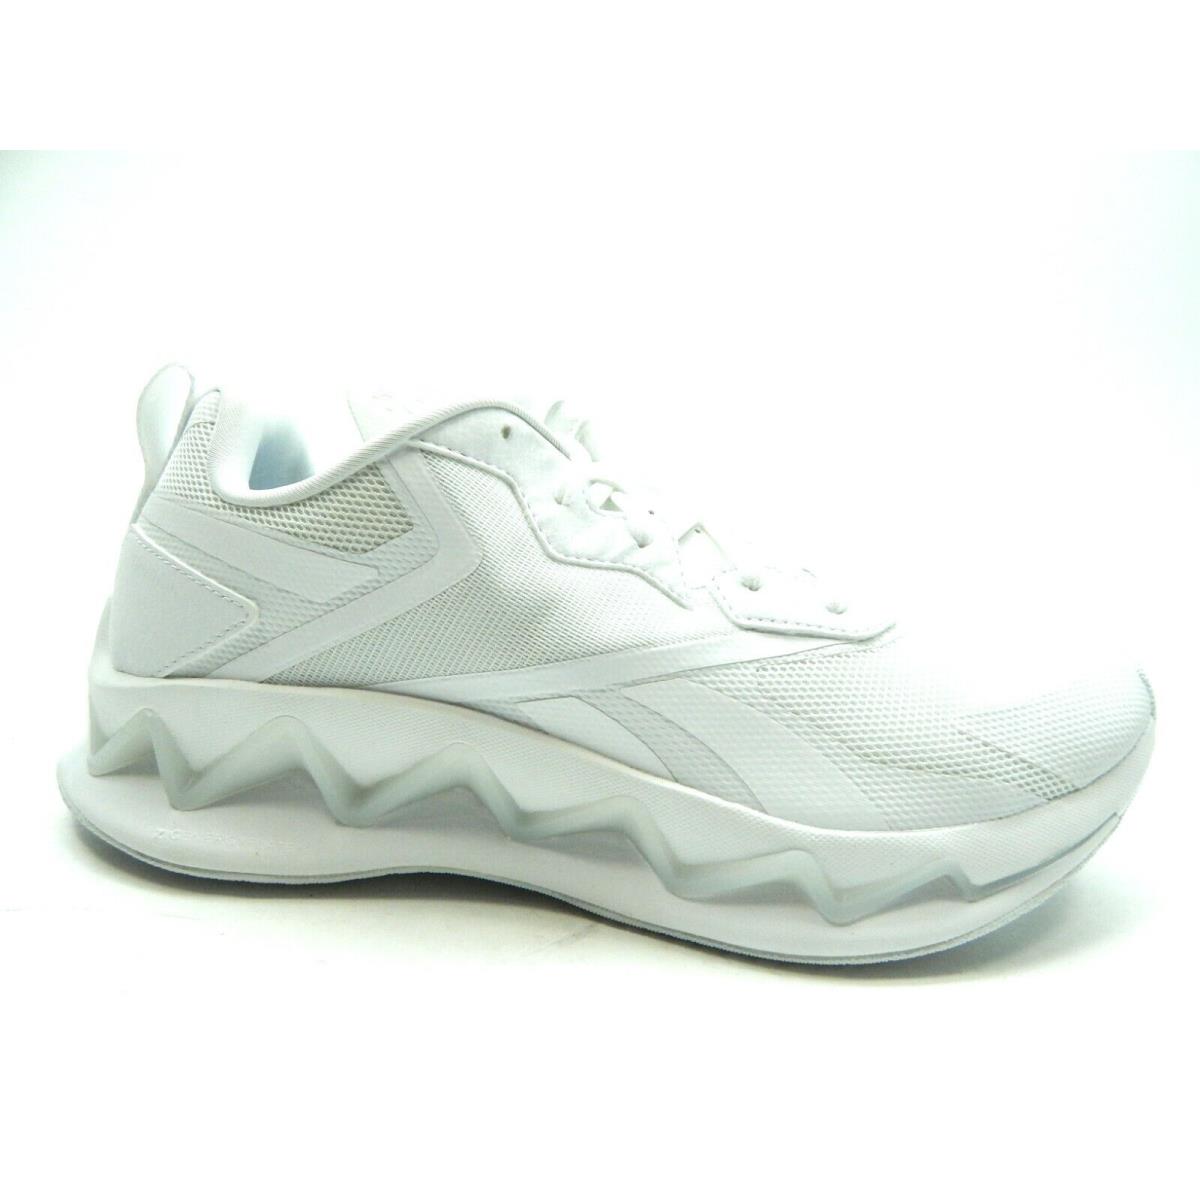 Reebok Zig Elusion Energy White FV3842 Running Men Shoes Size 9.5